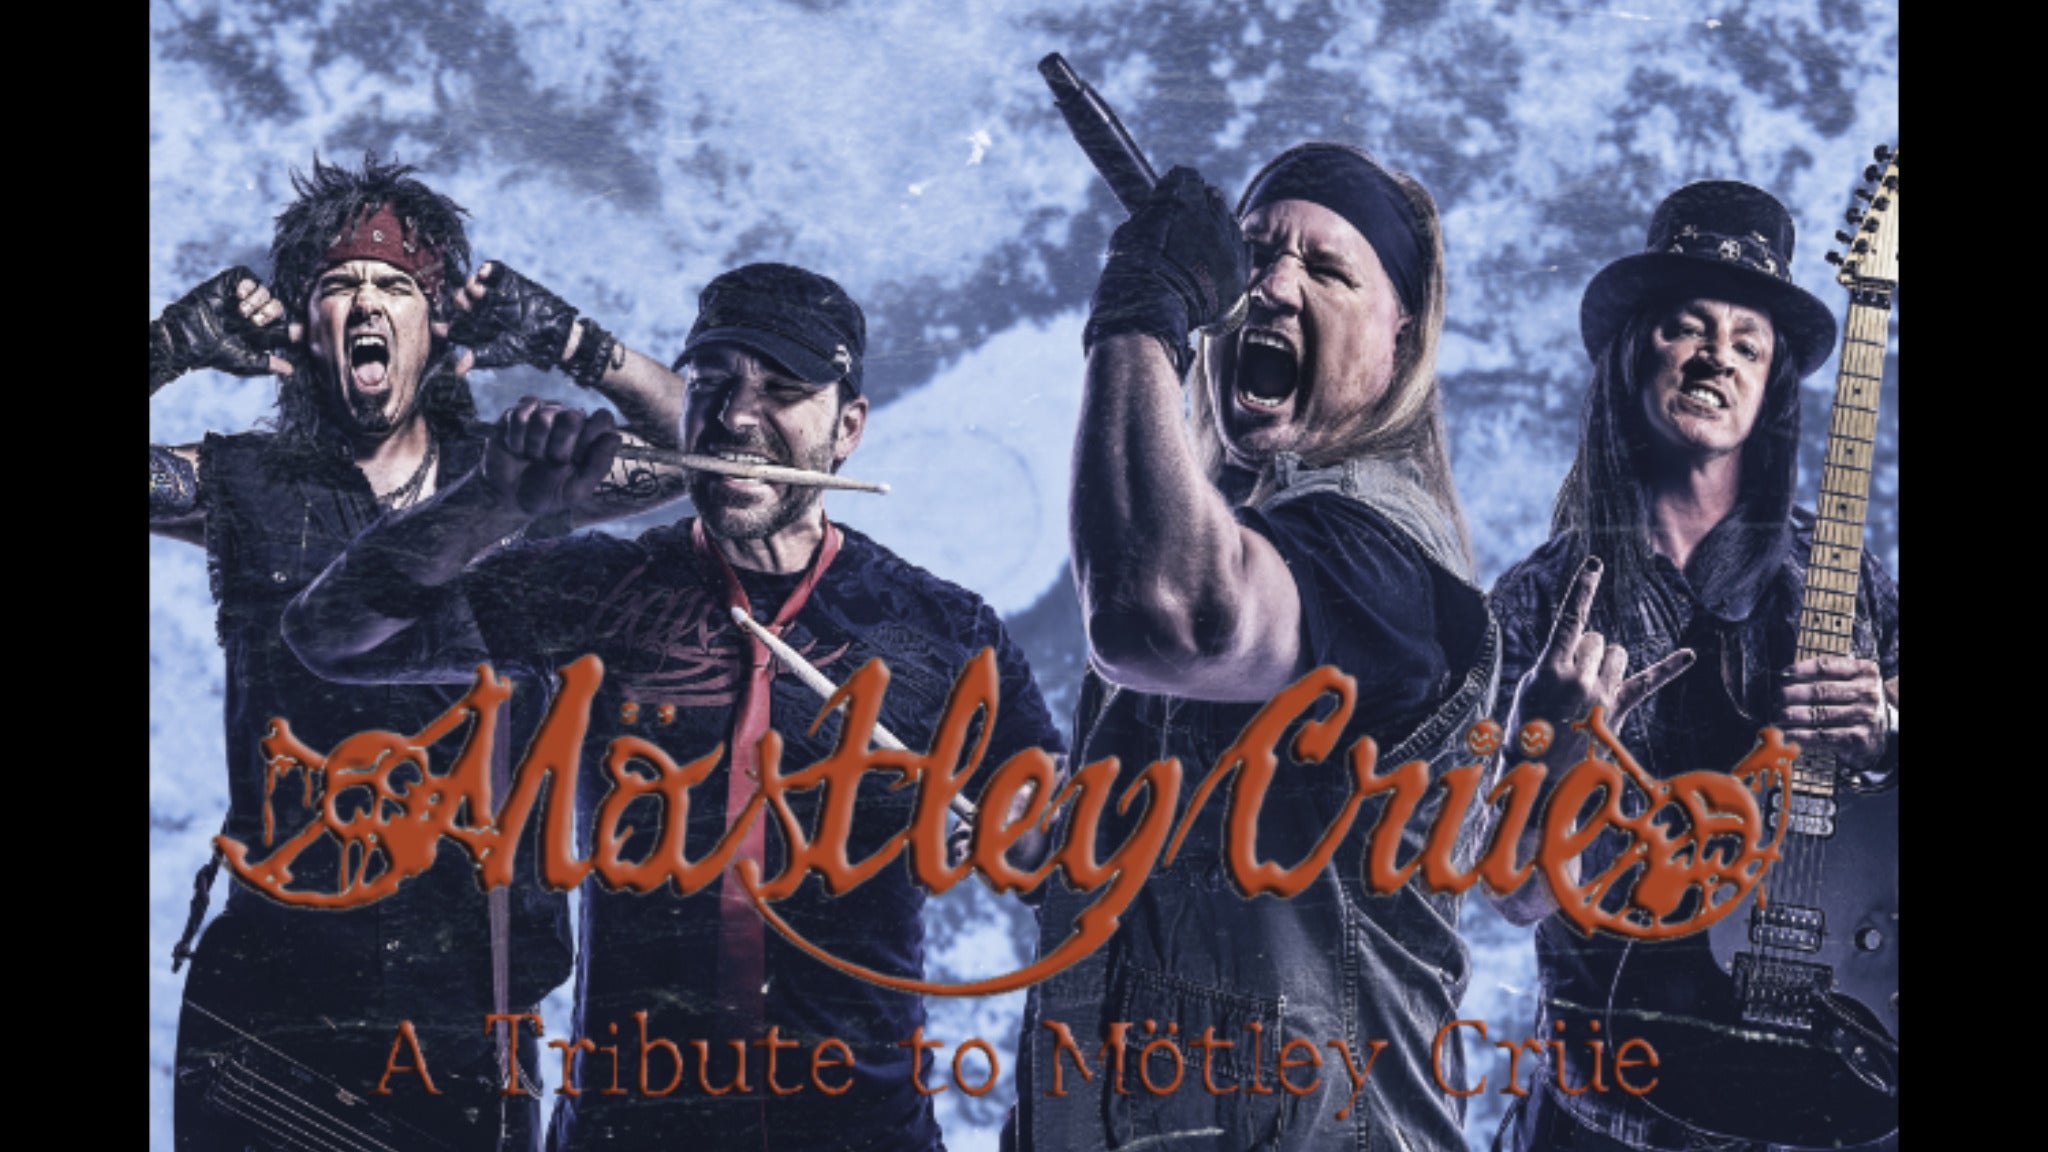 Mostley Crue A Tribute To Motley Crue tickets, presale info